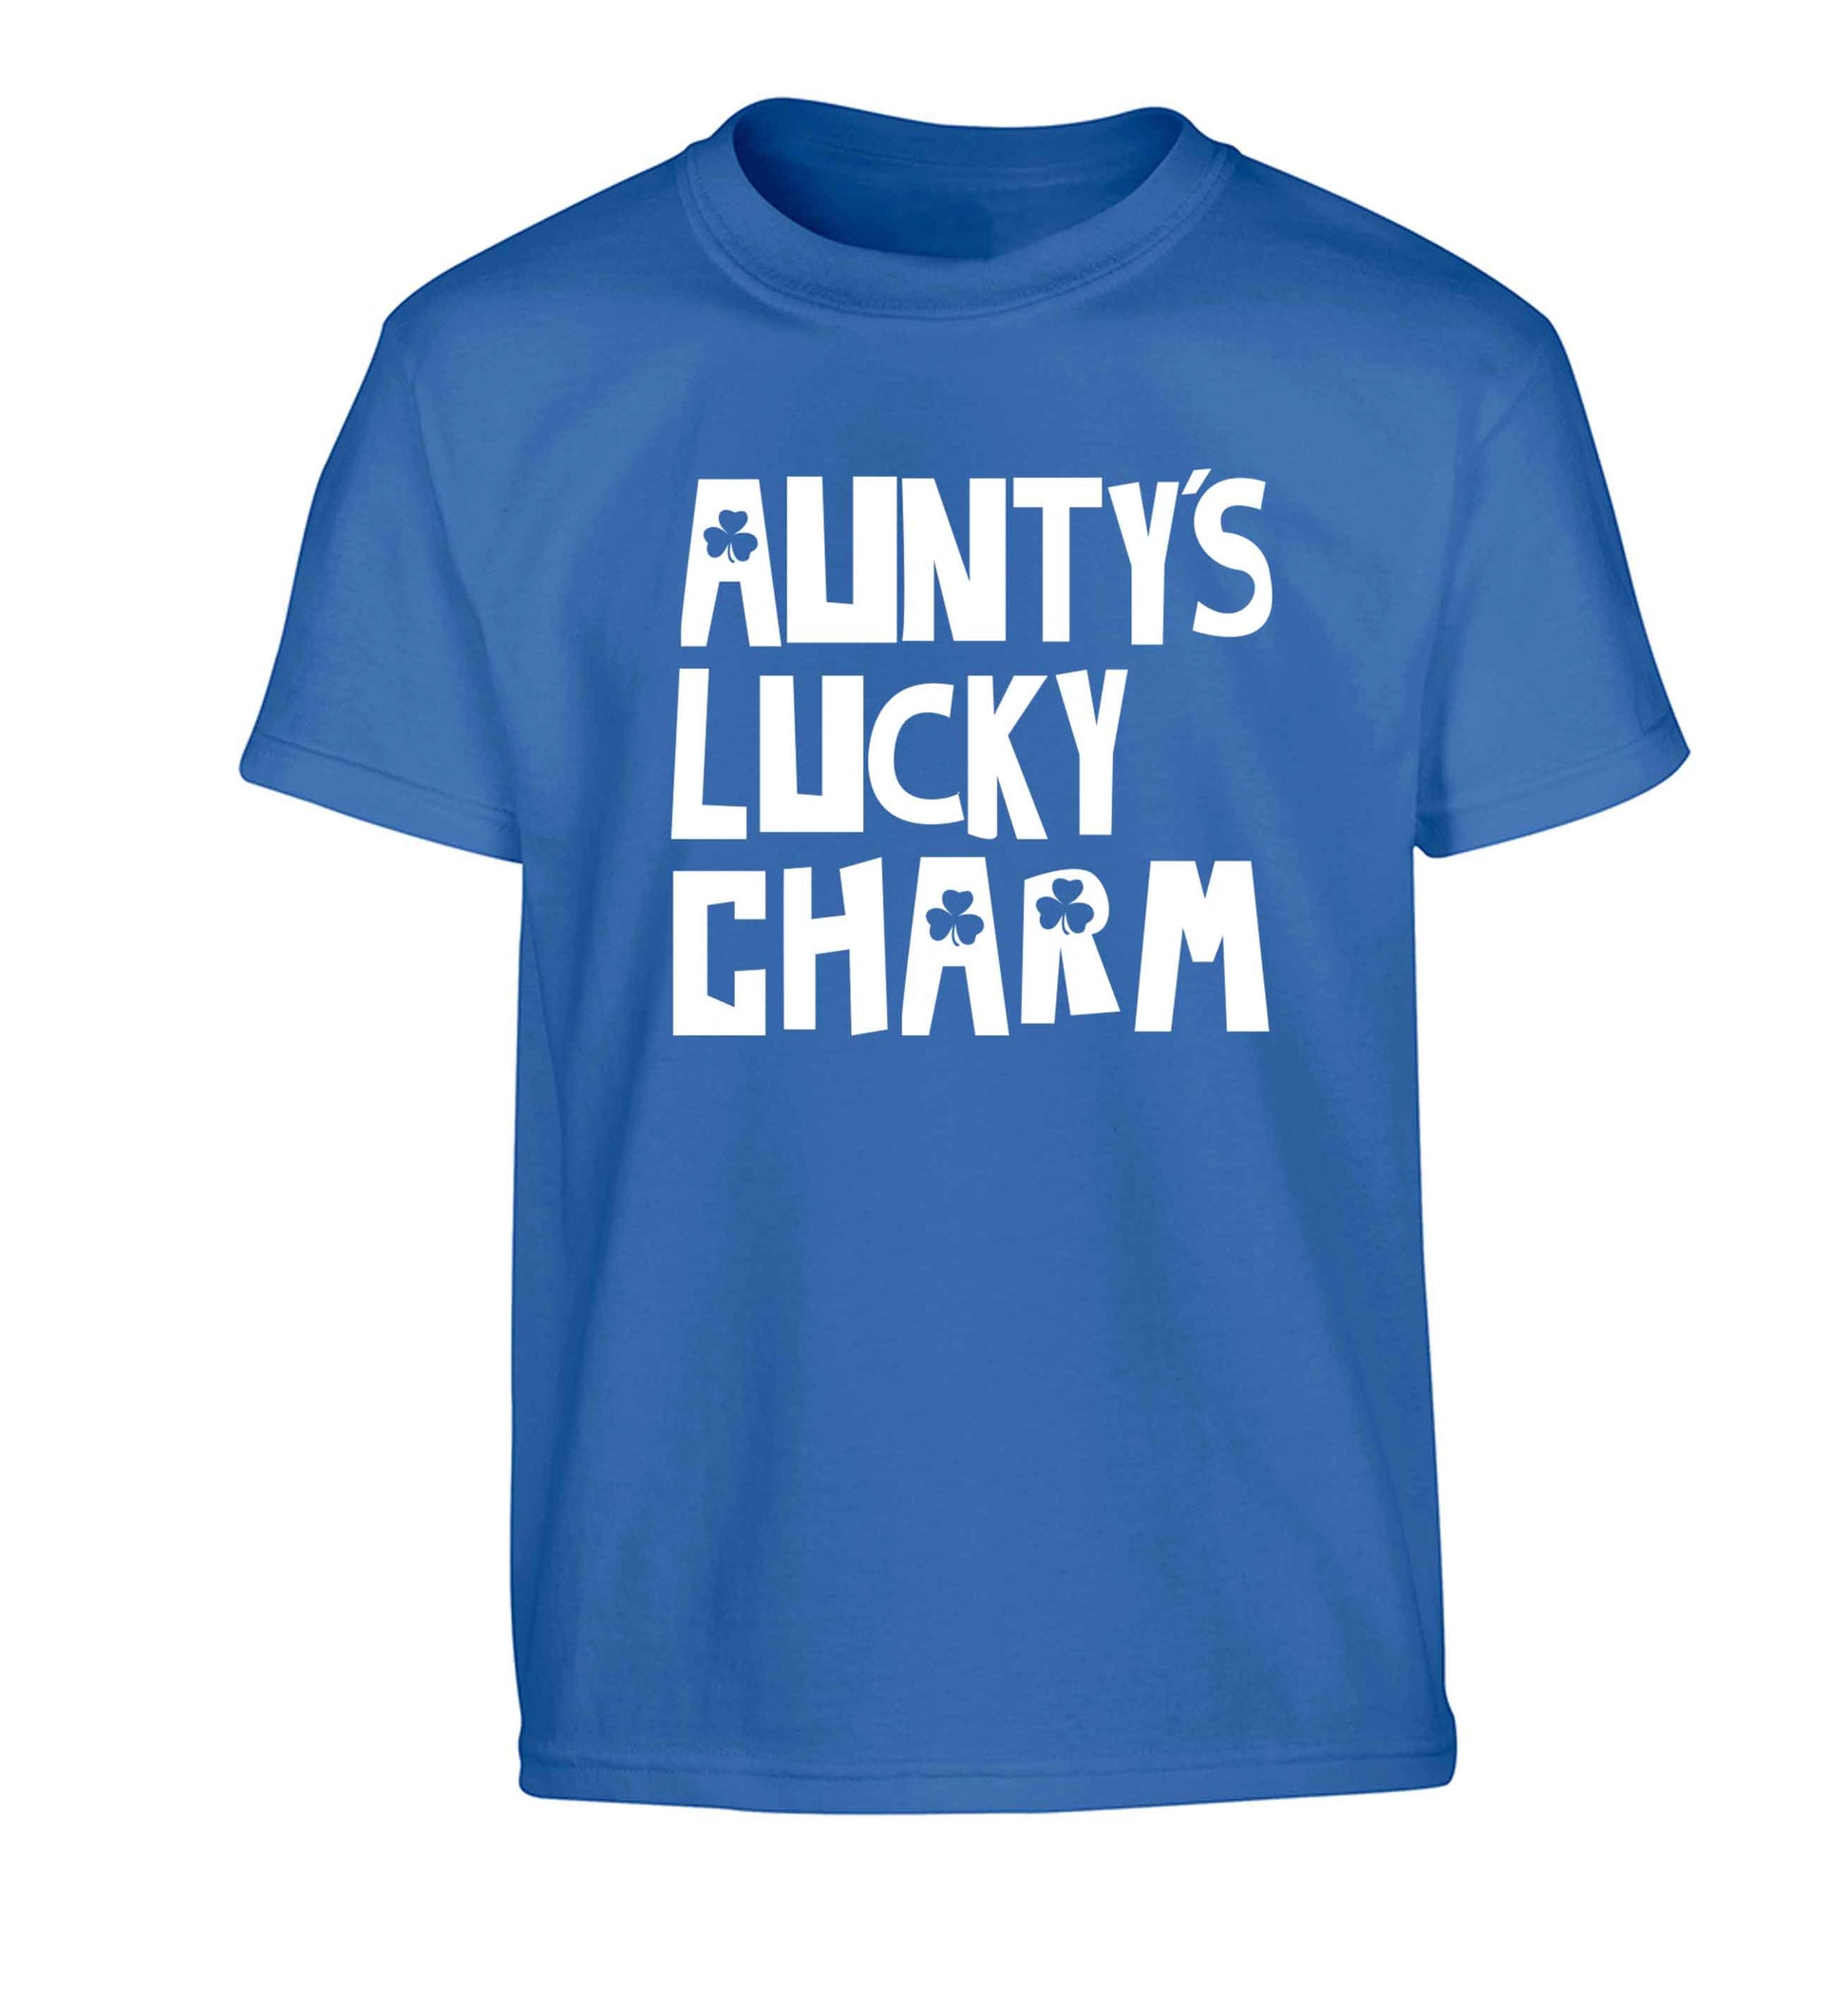 Aunty's lucky charm Children's blue Tshirt 12-13 Years